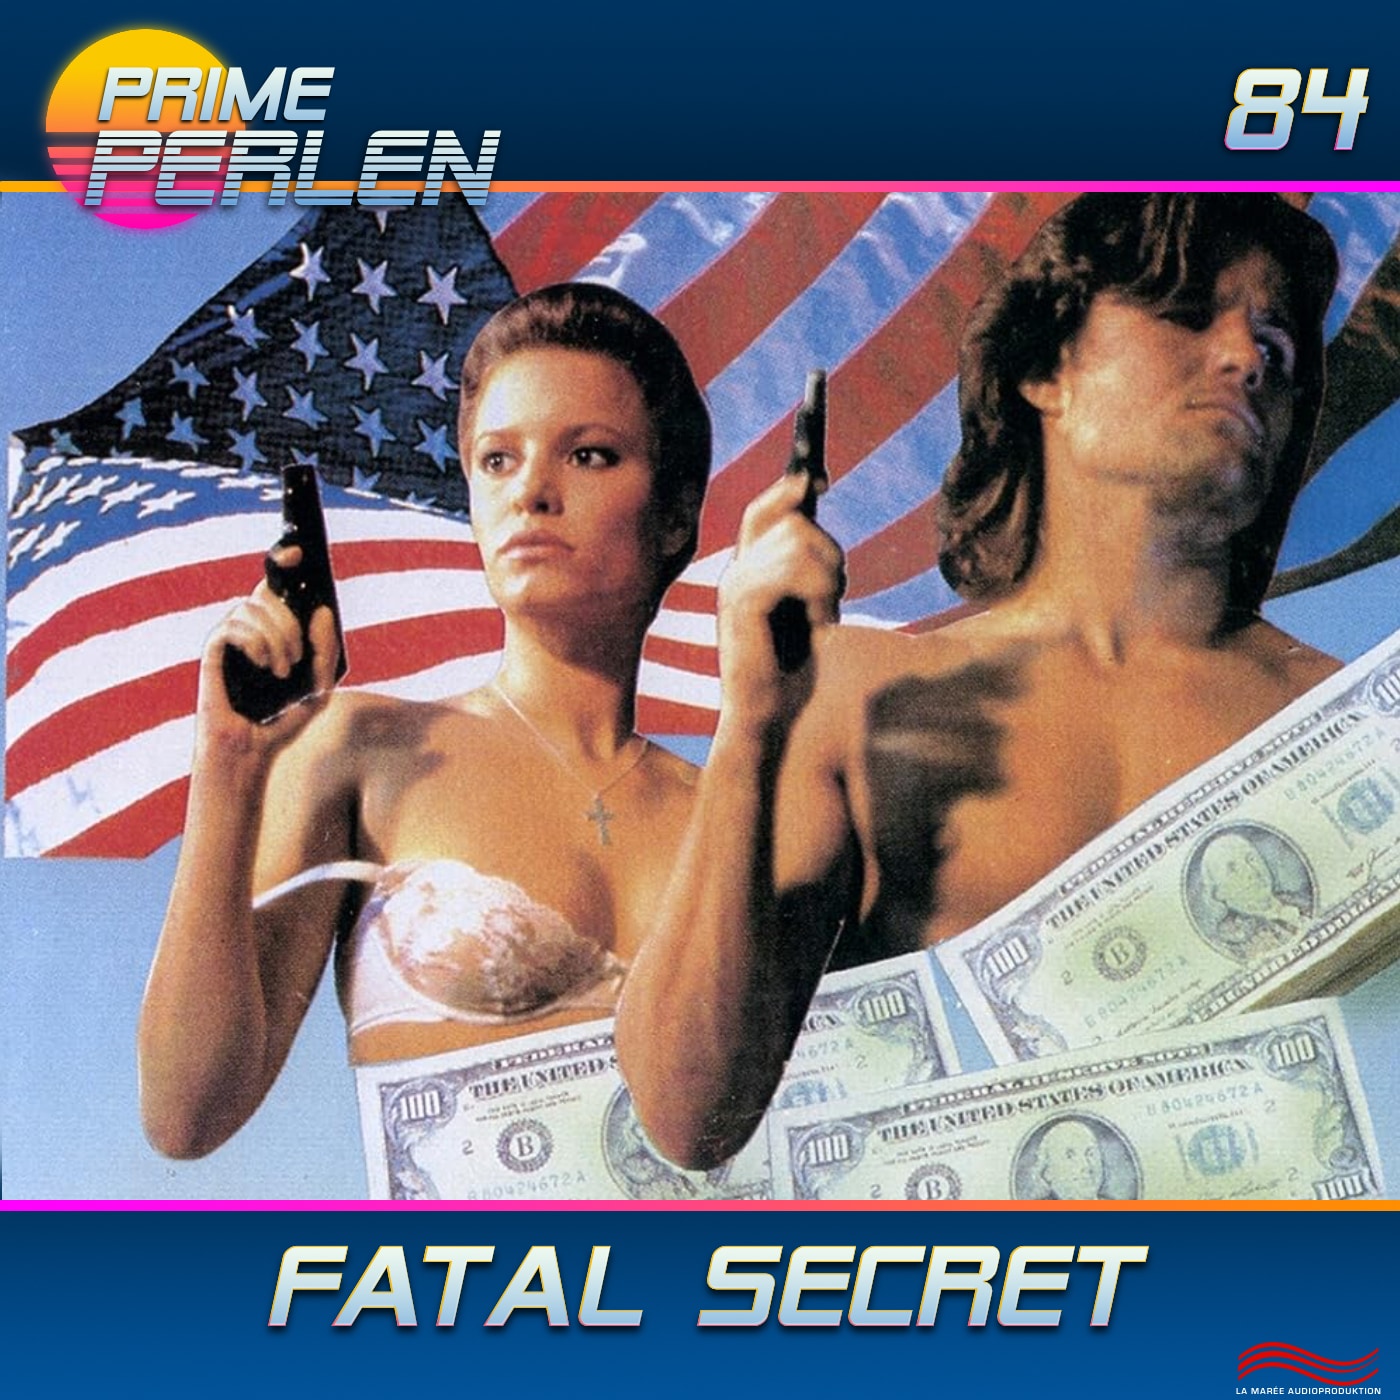 Prime Perlen #84 – Fatal Secret